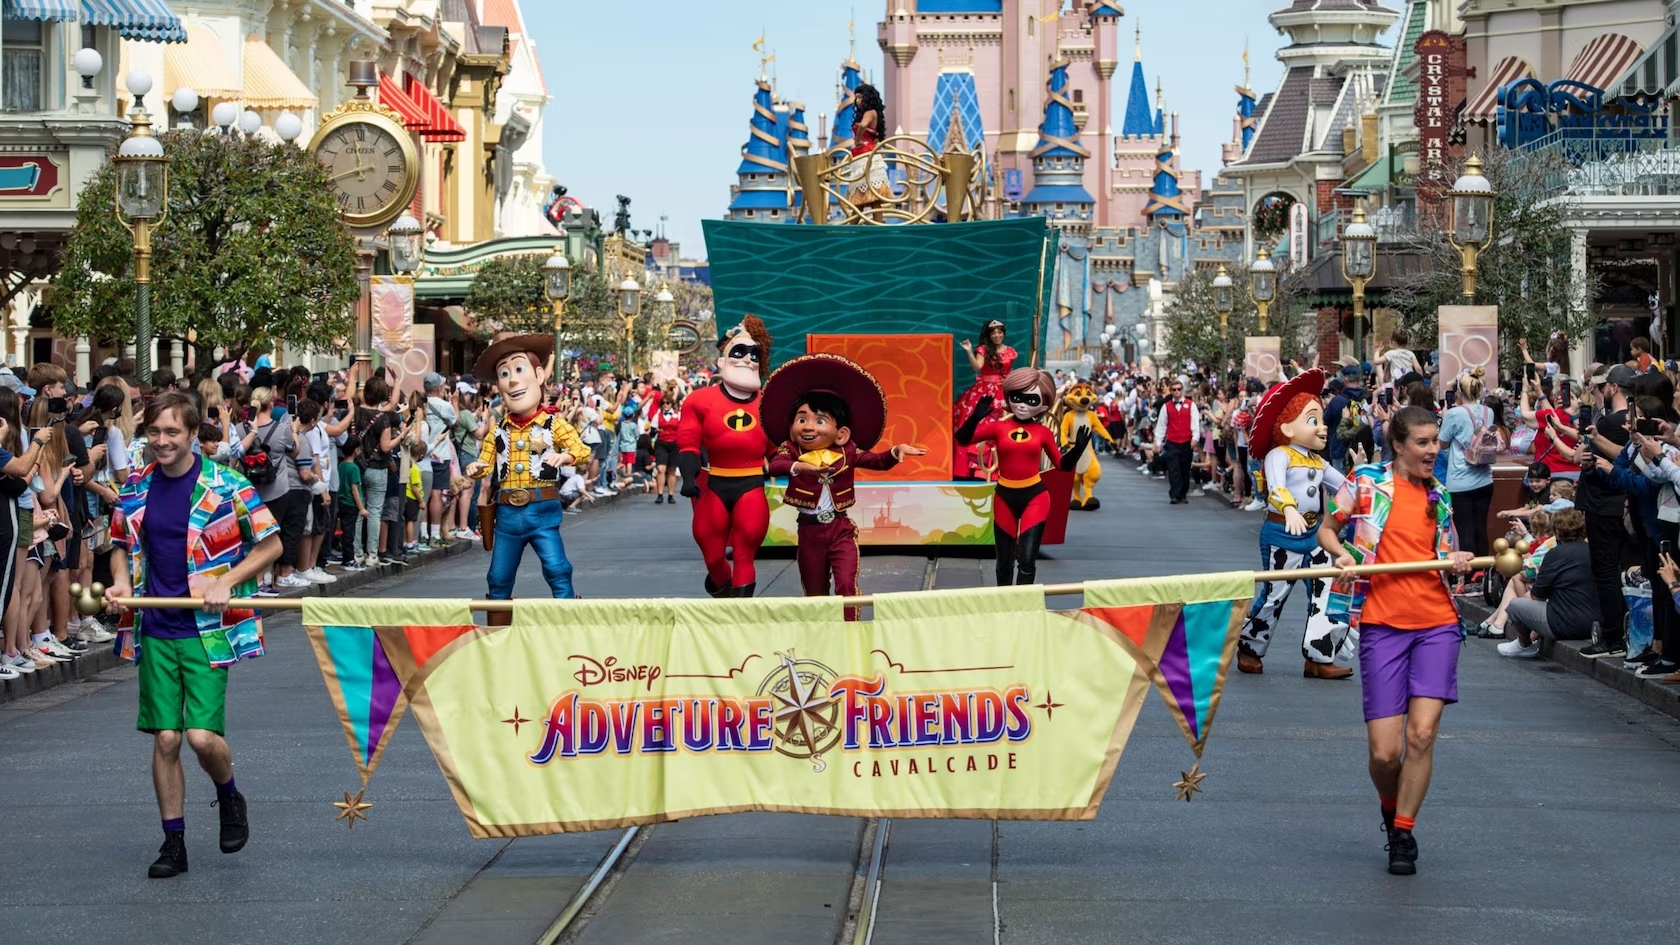 Parata con carri Disney Adventure Friends Cavalcade